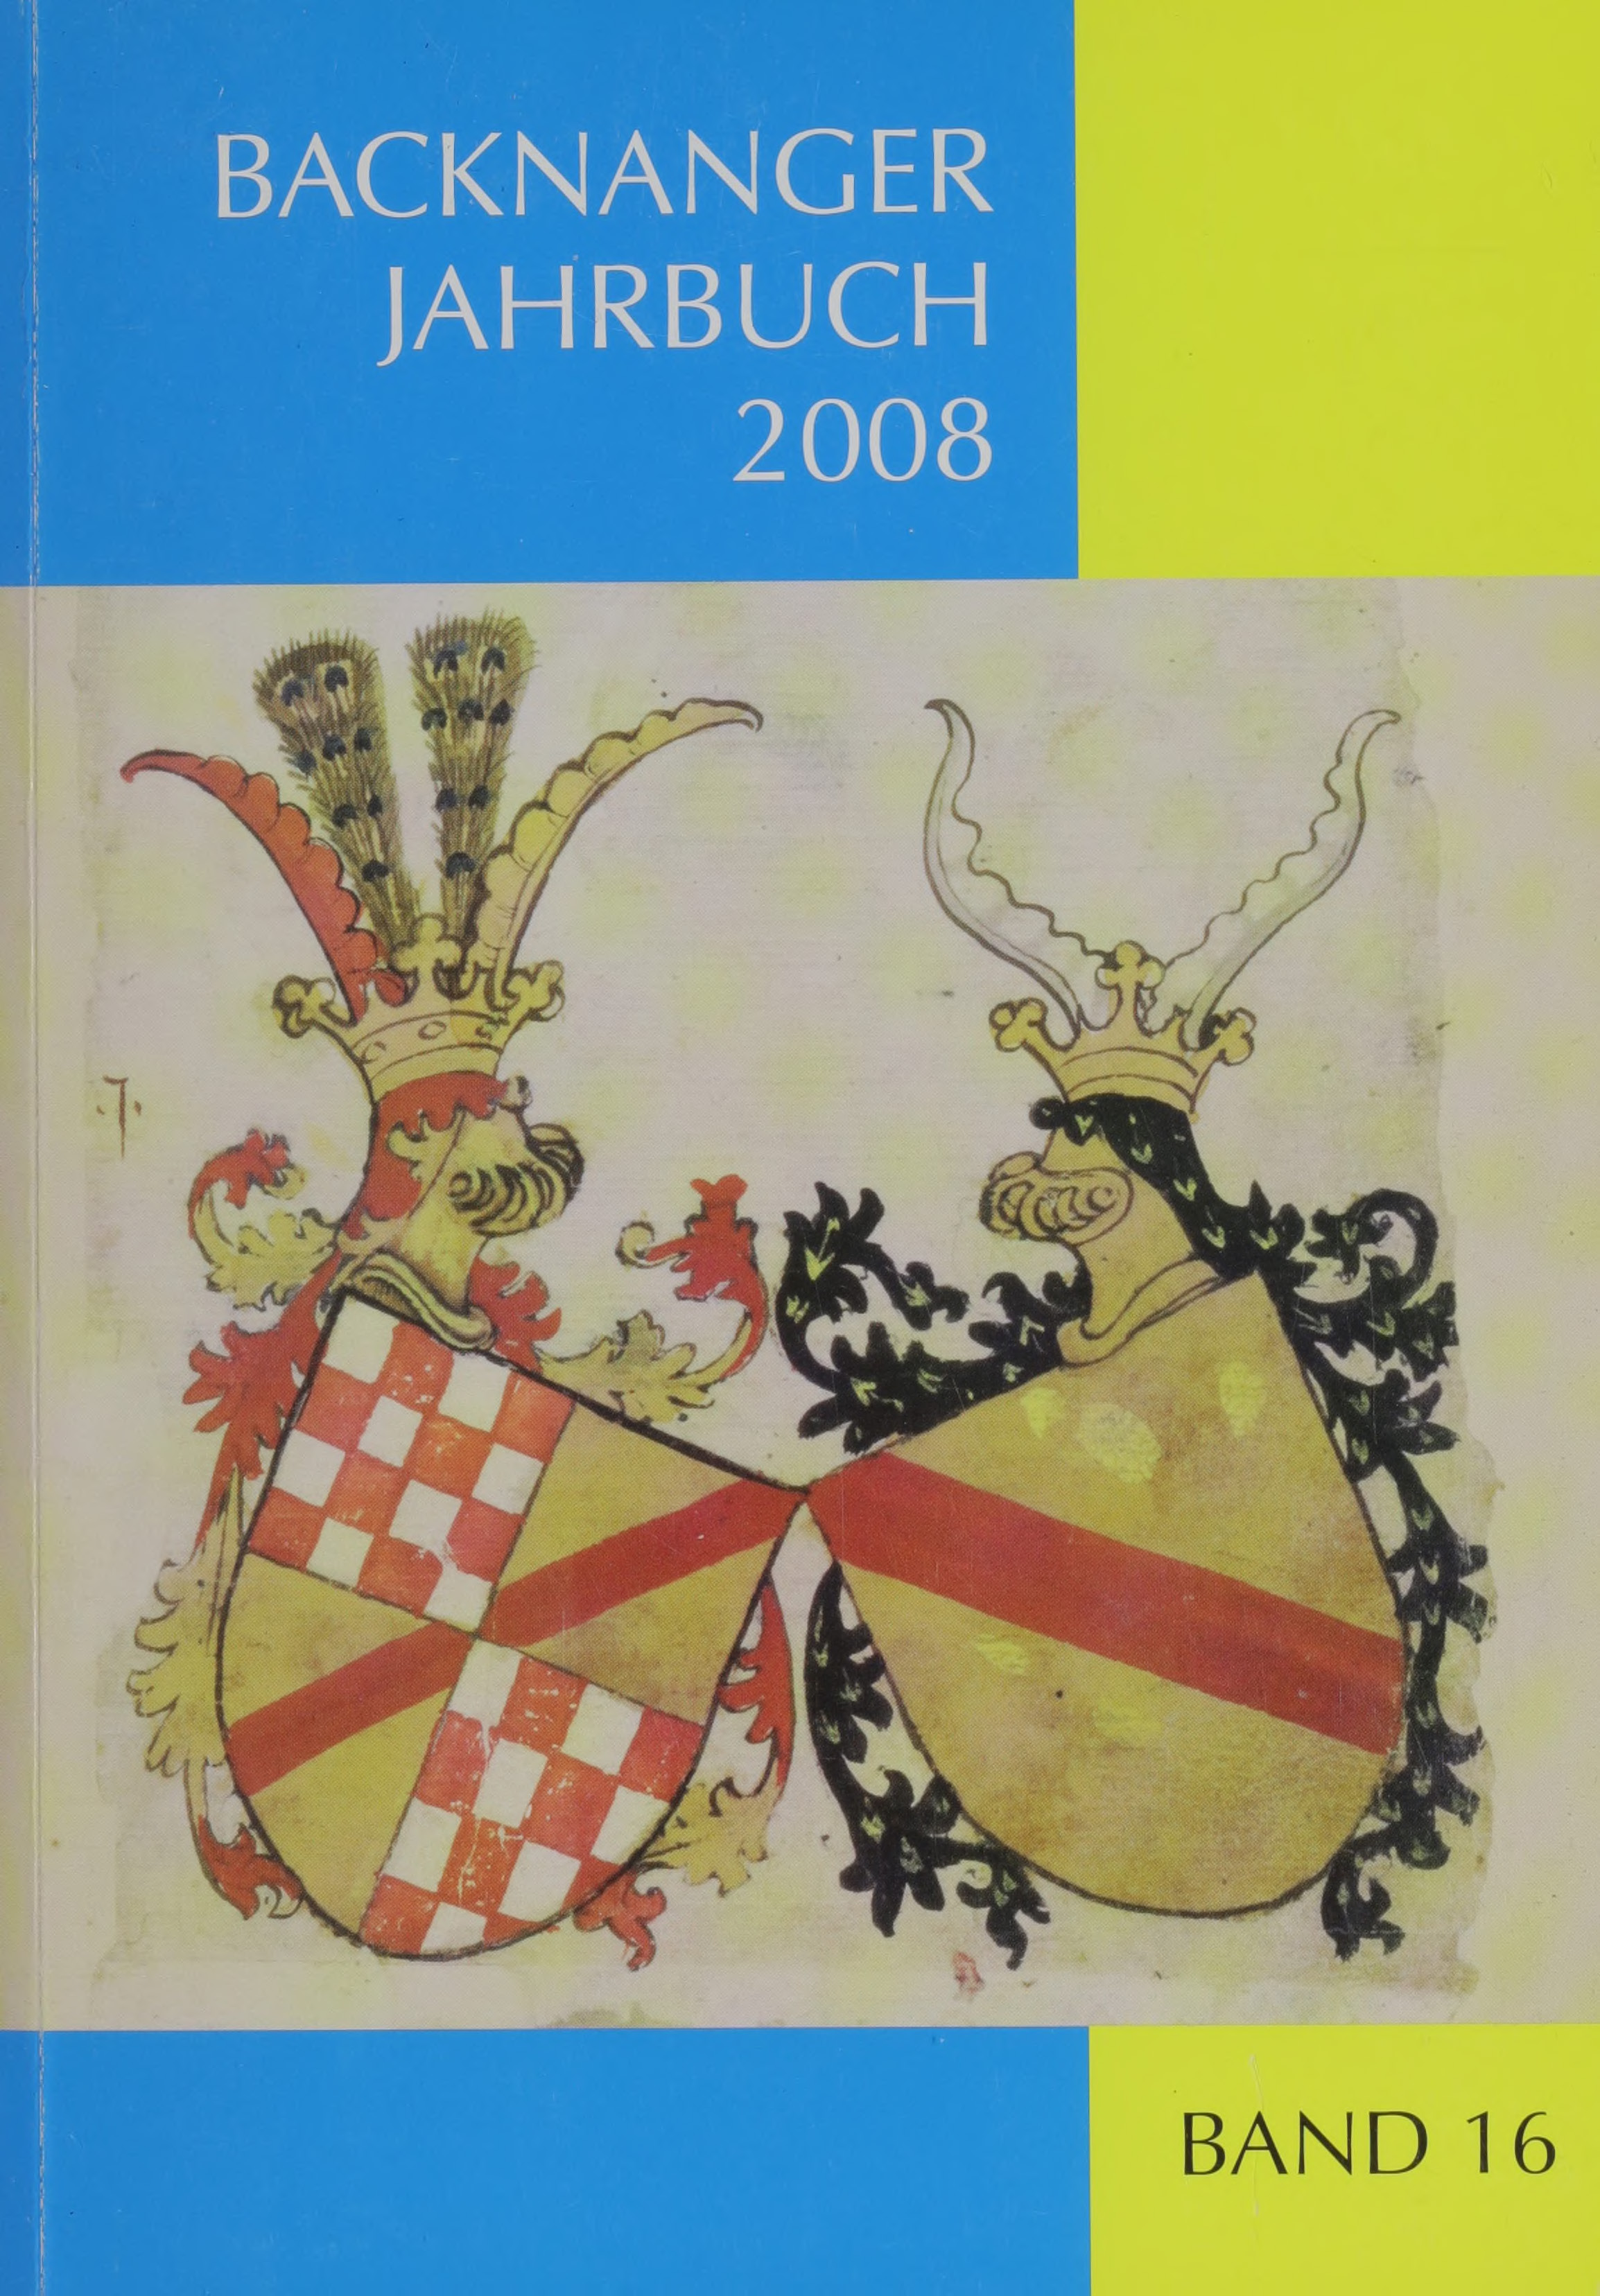                     Ansehen Bd. 16 (2008): Backnanger Jahrbuch
                